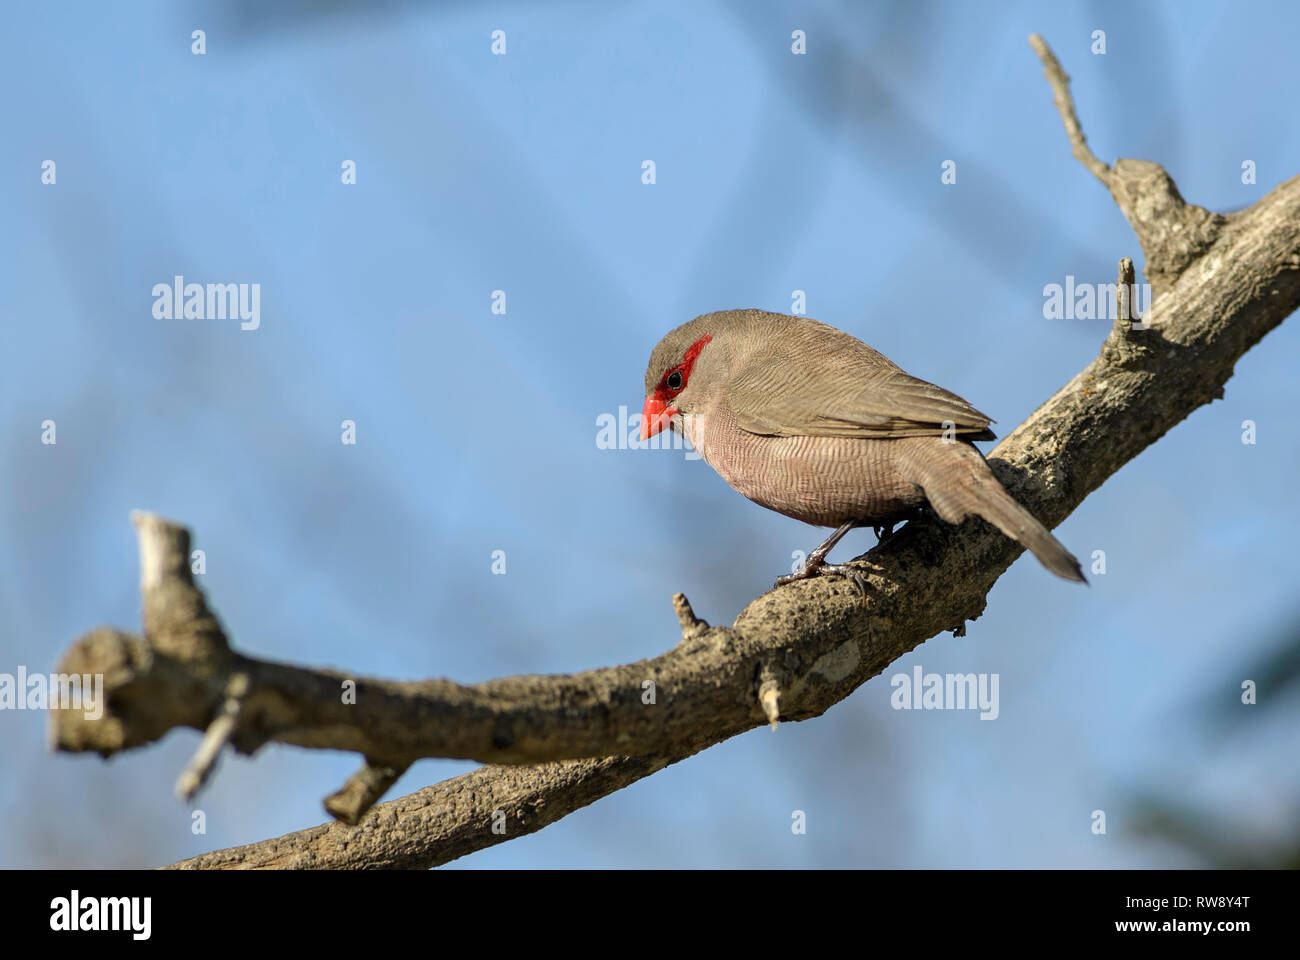 Bird with red beak hi-res stock photography images - Alamy